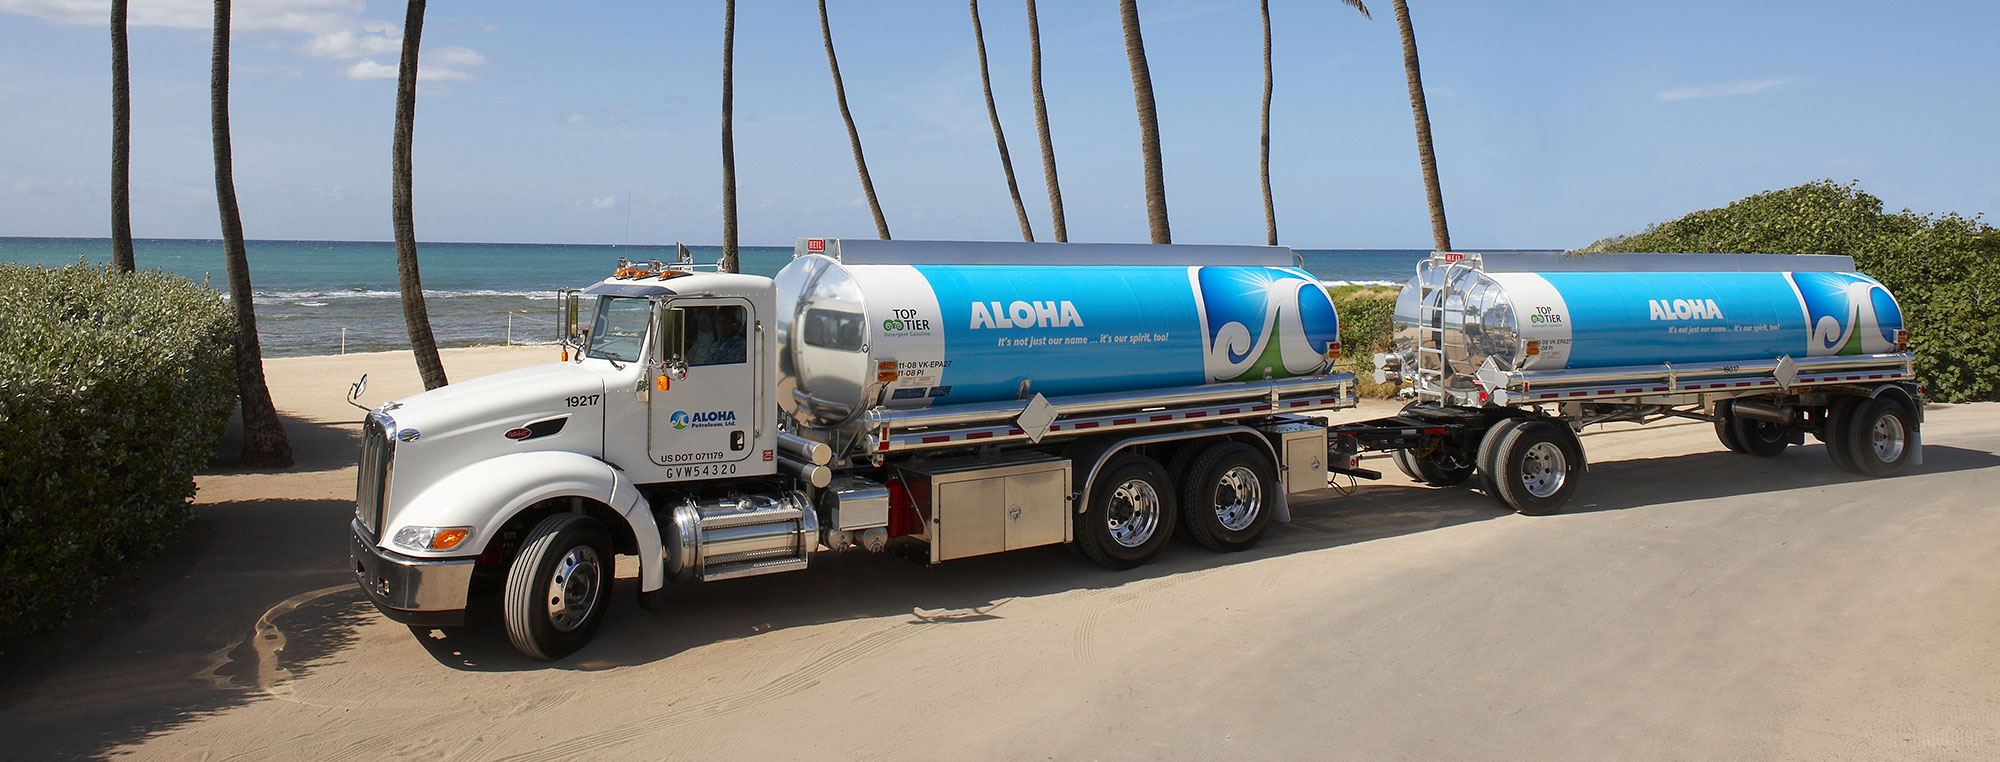 Aloha Petroleum truck